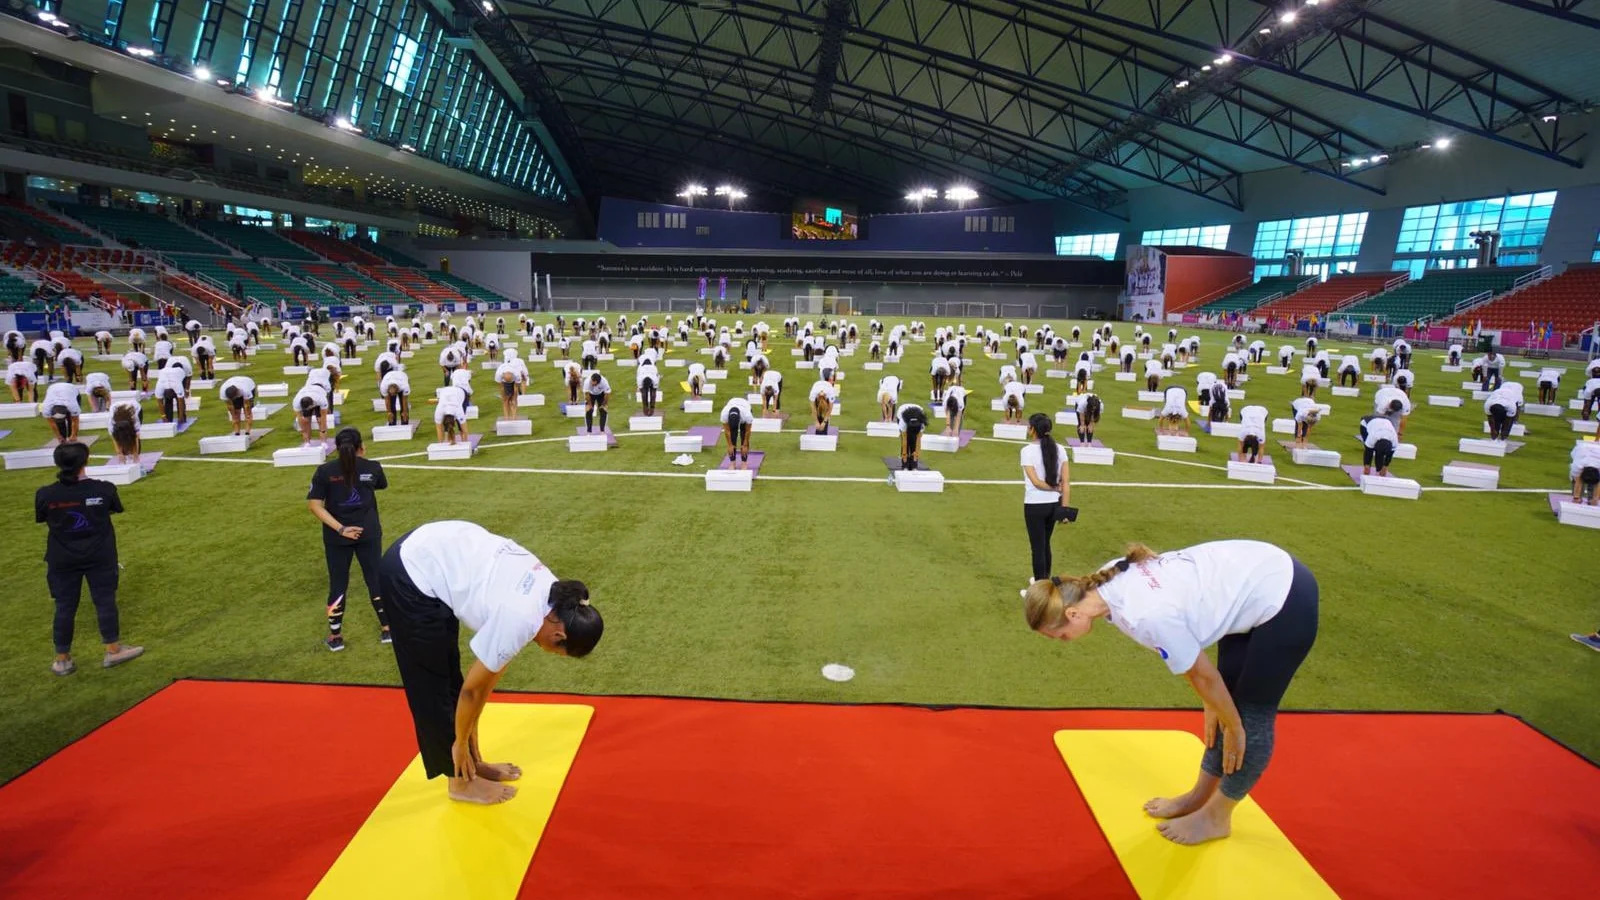 A world record at Qatar yoga event and PM Modi’s message